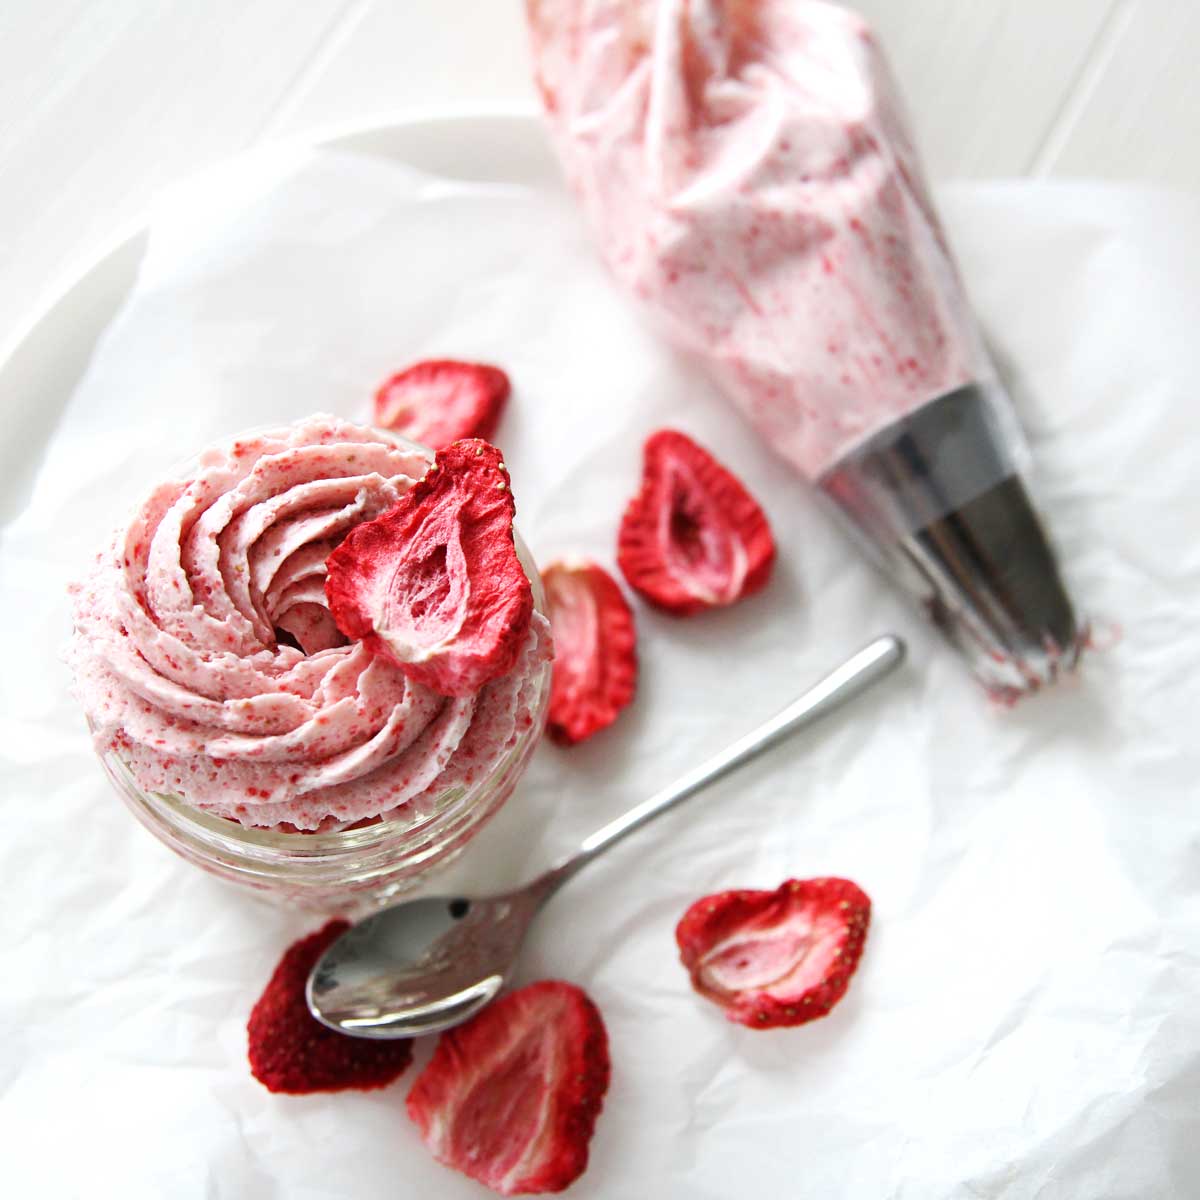 So SImple! Pretty & Pink Strawberry Whipped Cream (Chantilly Cream) Recipe